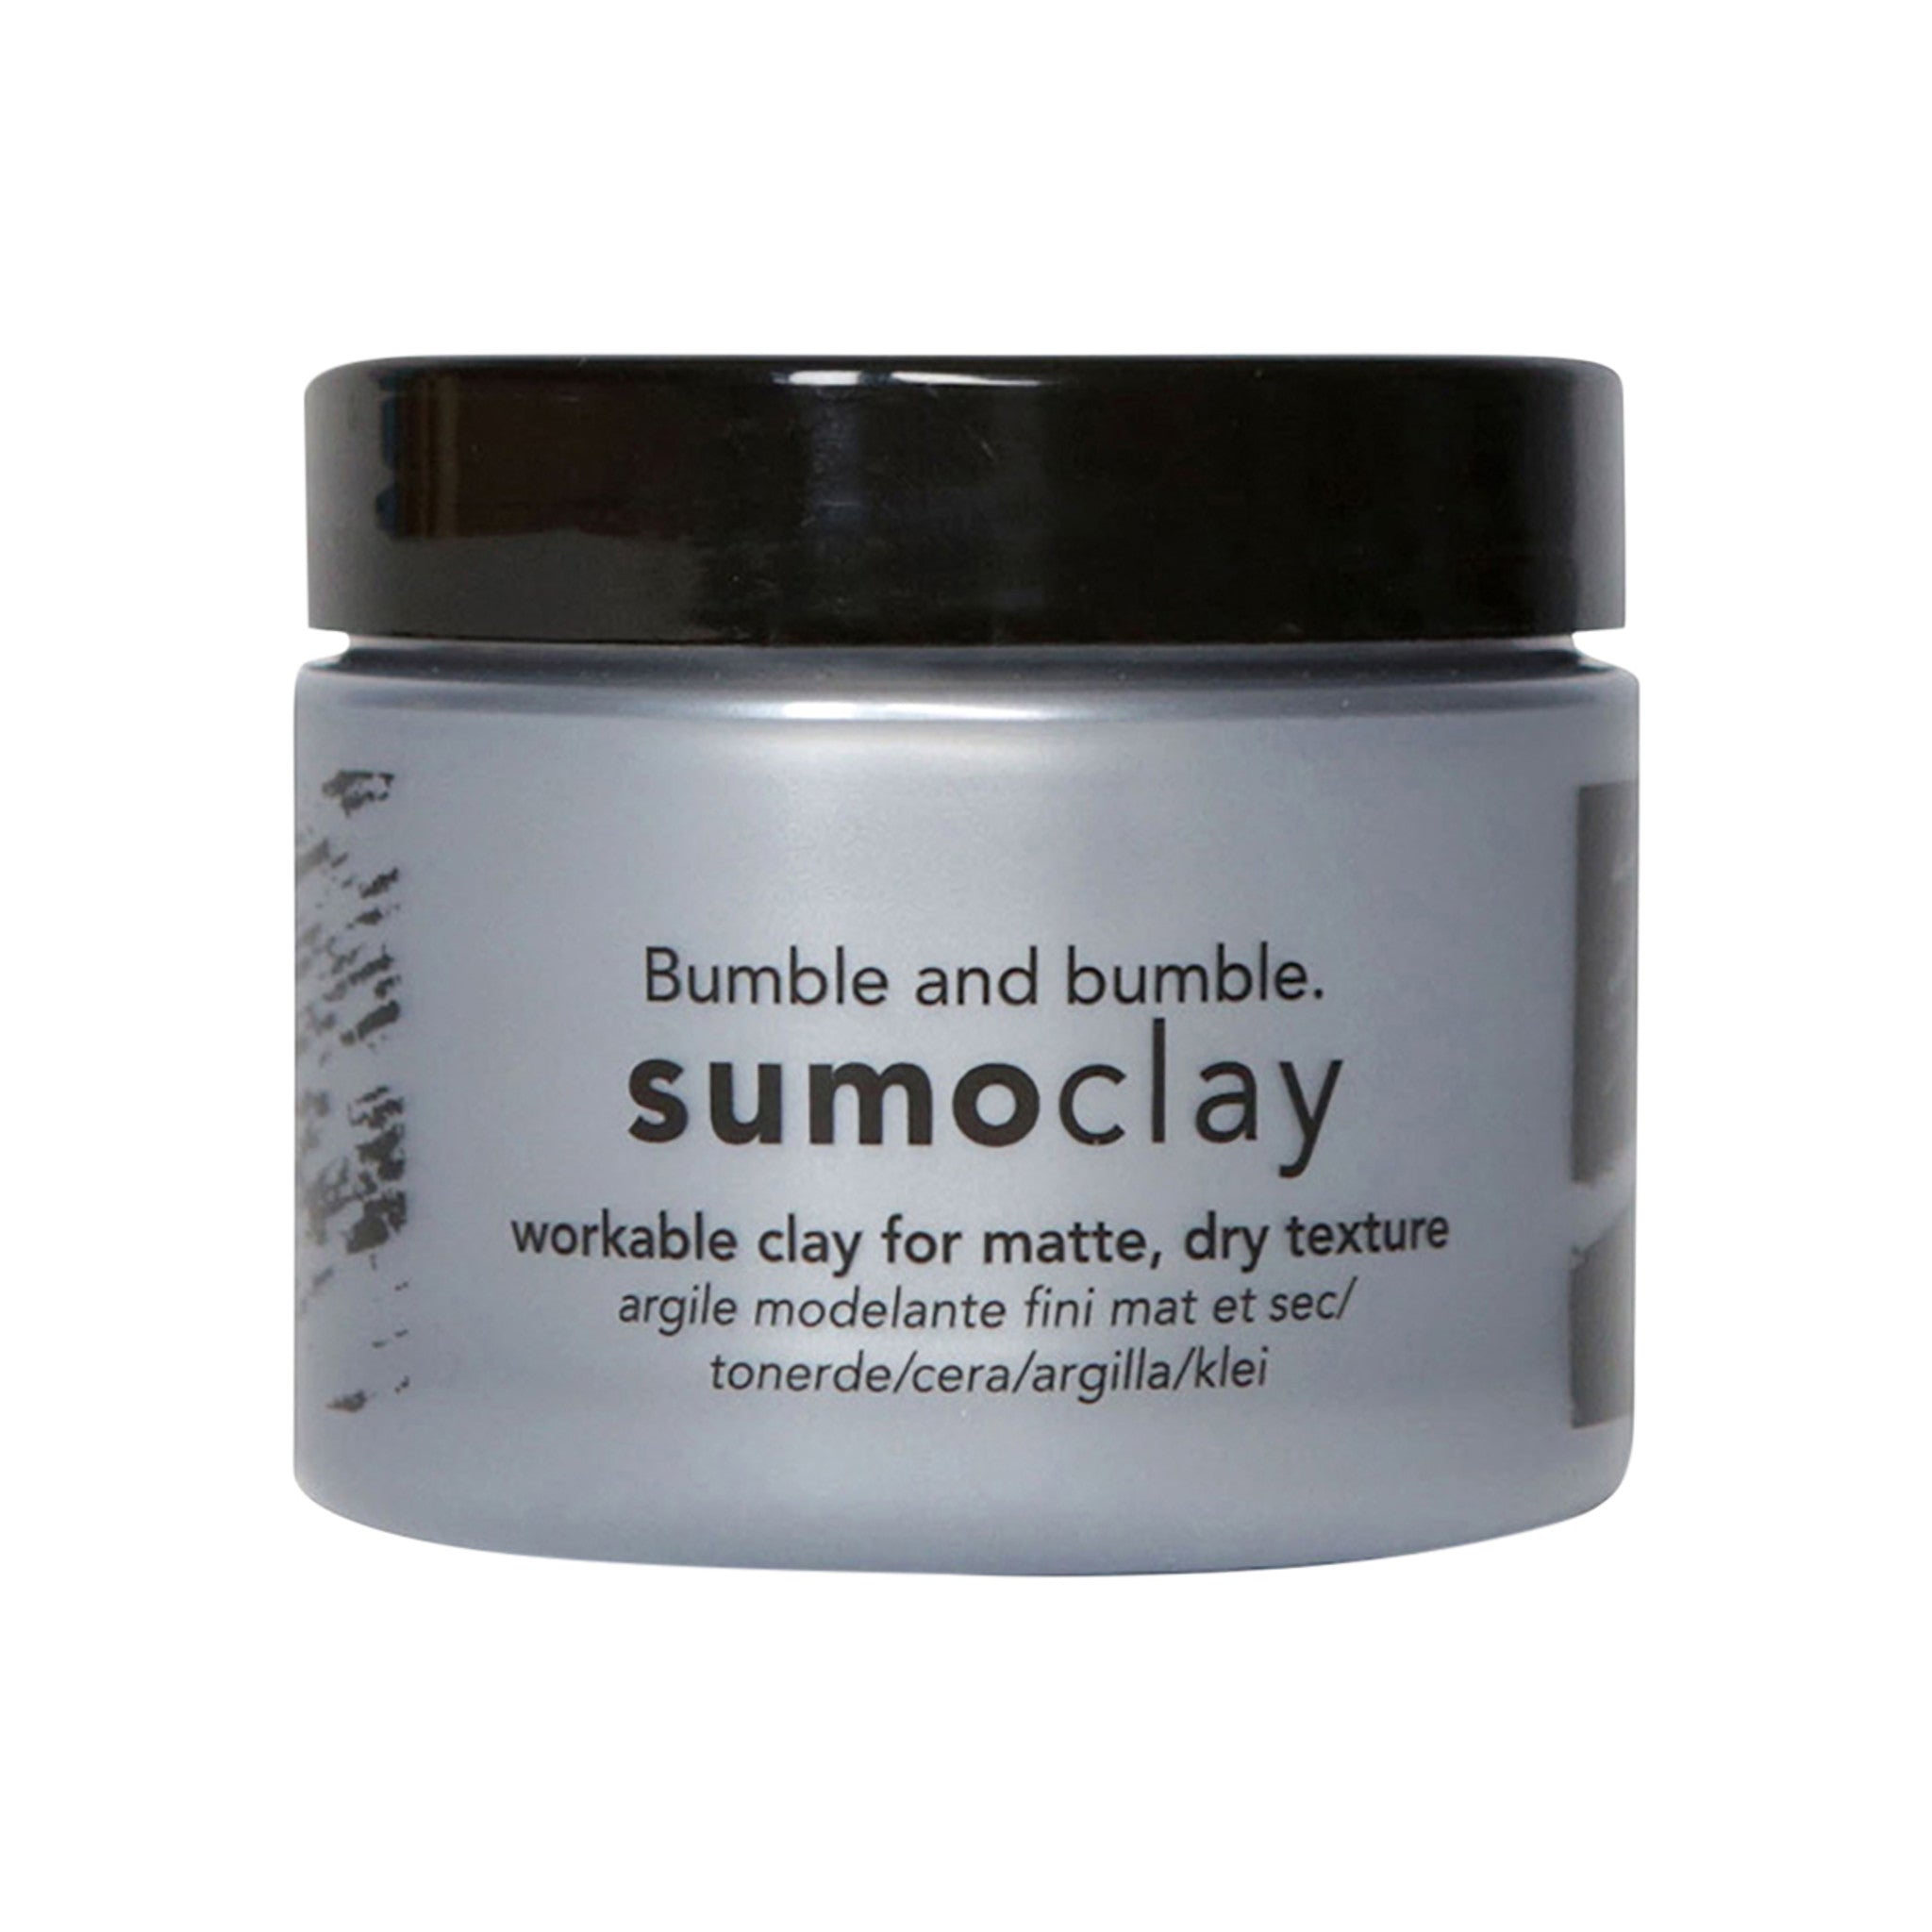 Bumble and Bumble Sumo Clay main image.